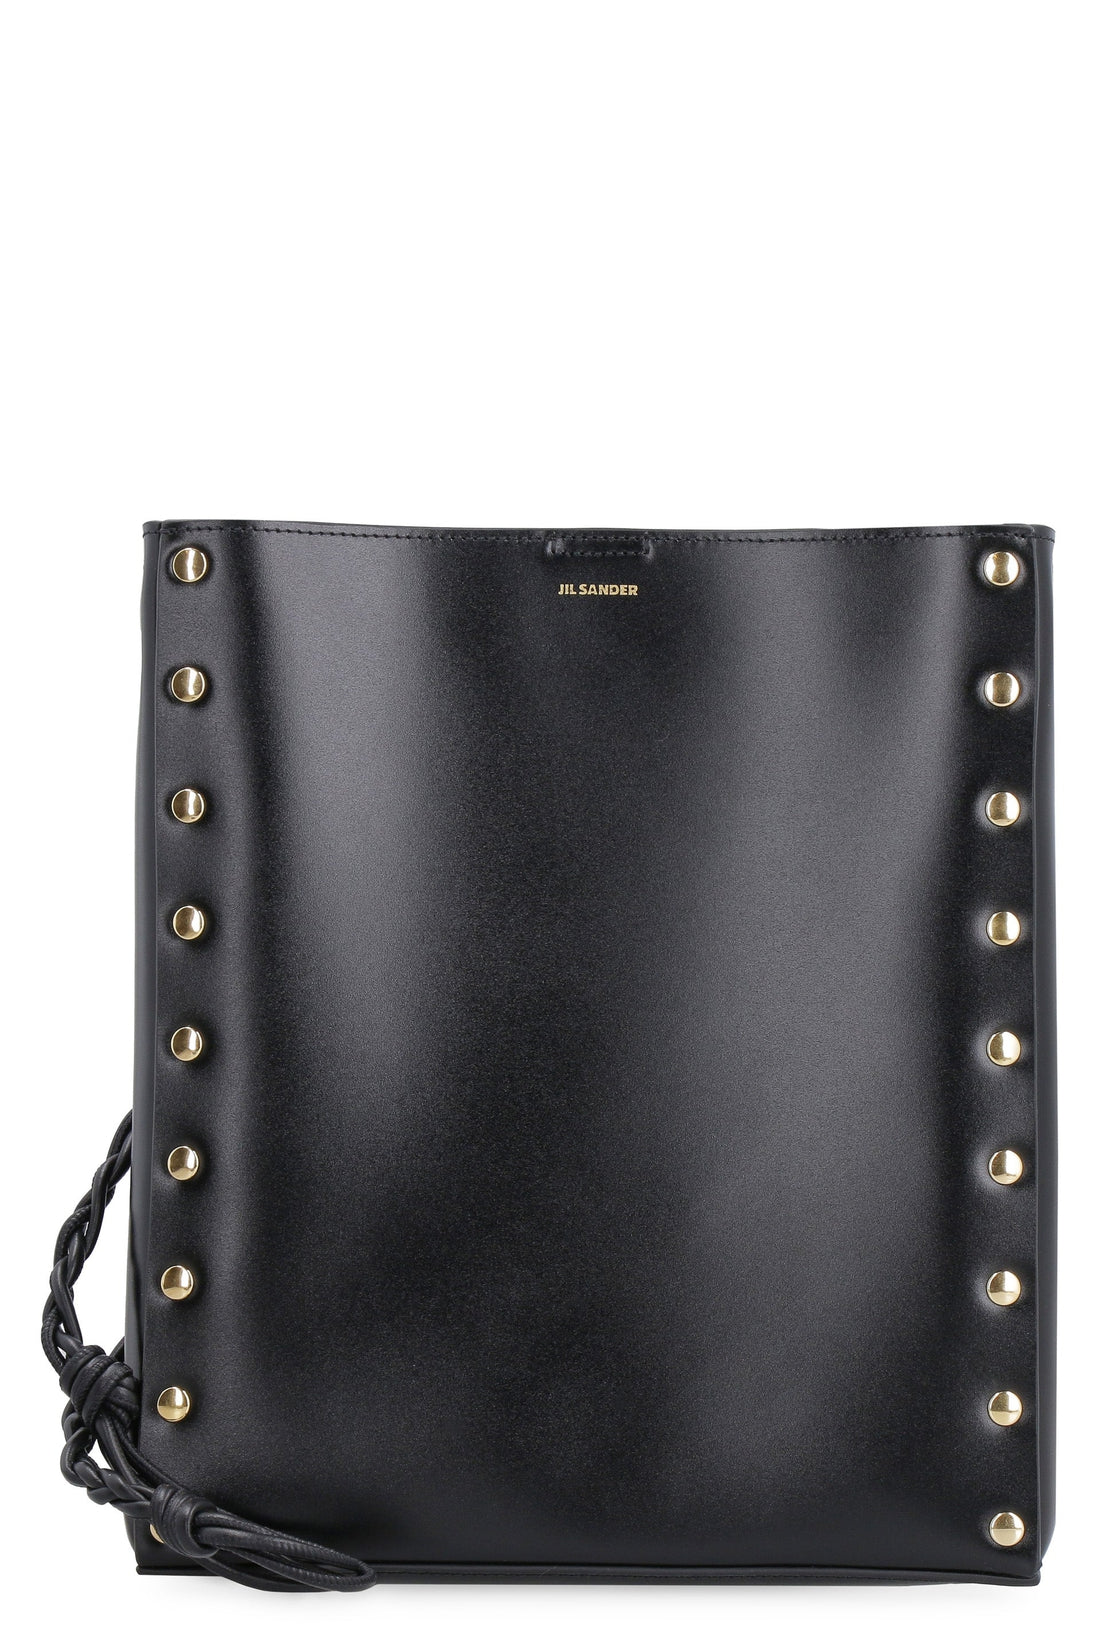 Jil Sander-OUTLET-SALE-Tangle leather medium bag with flat studs-ARCHIVIST